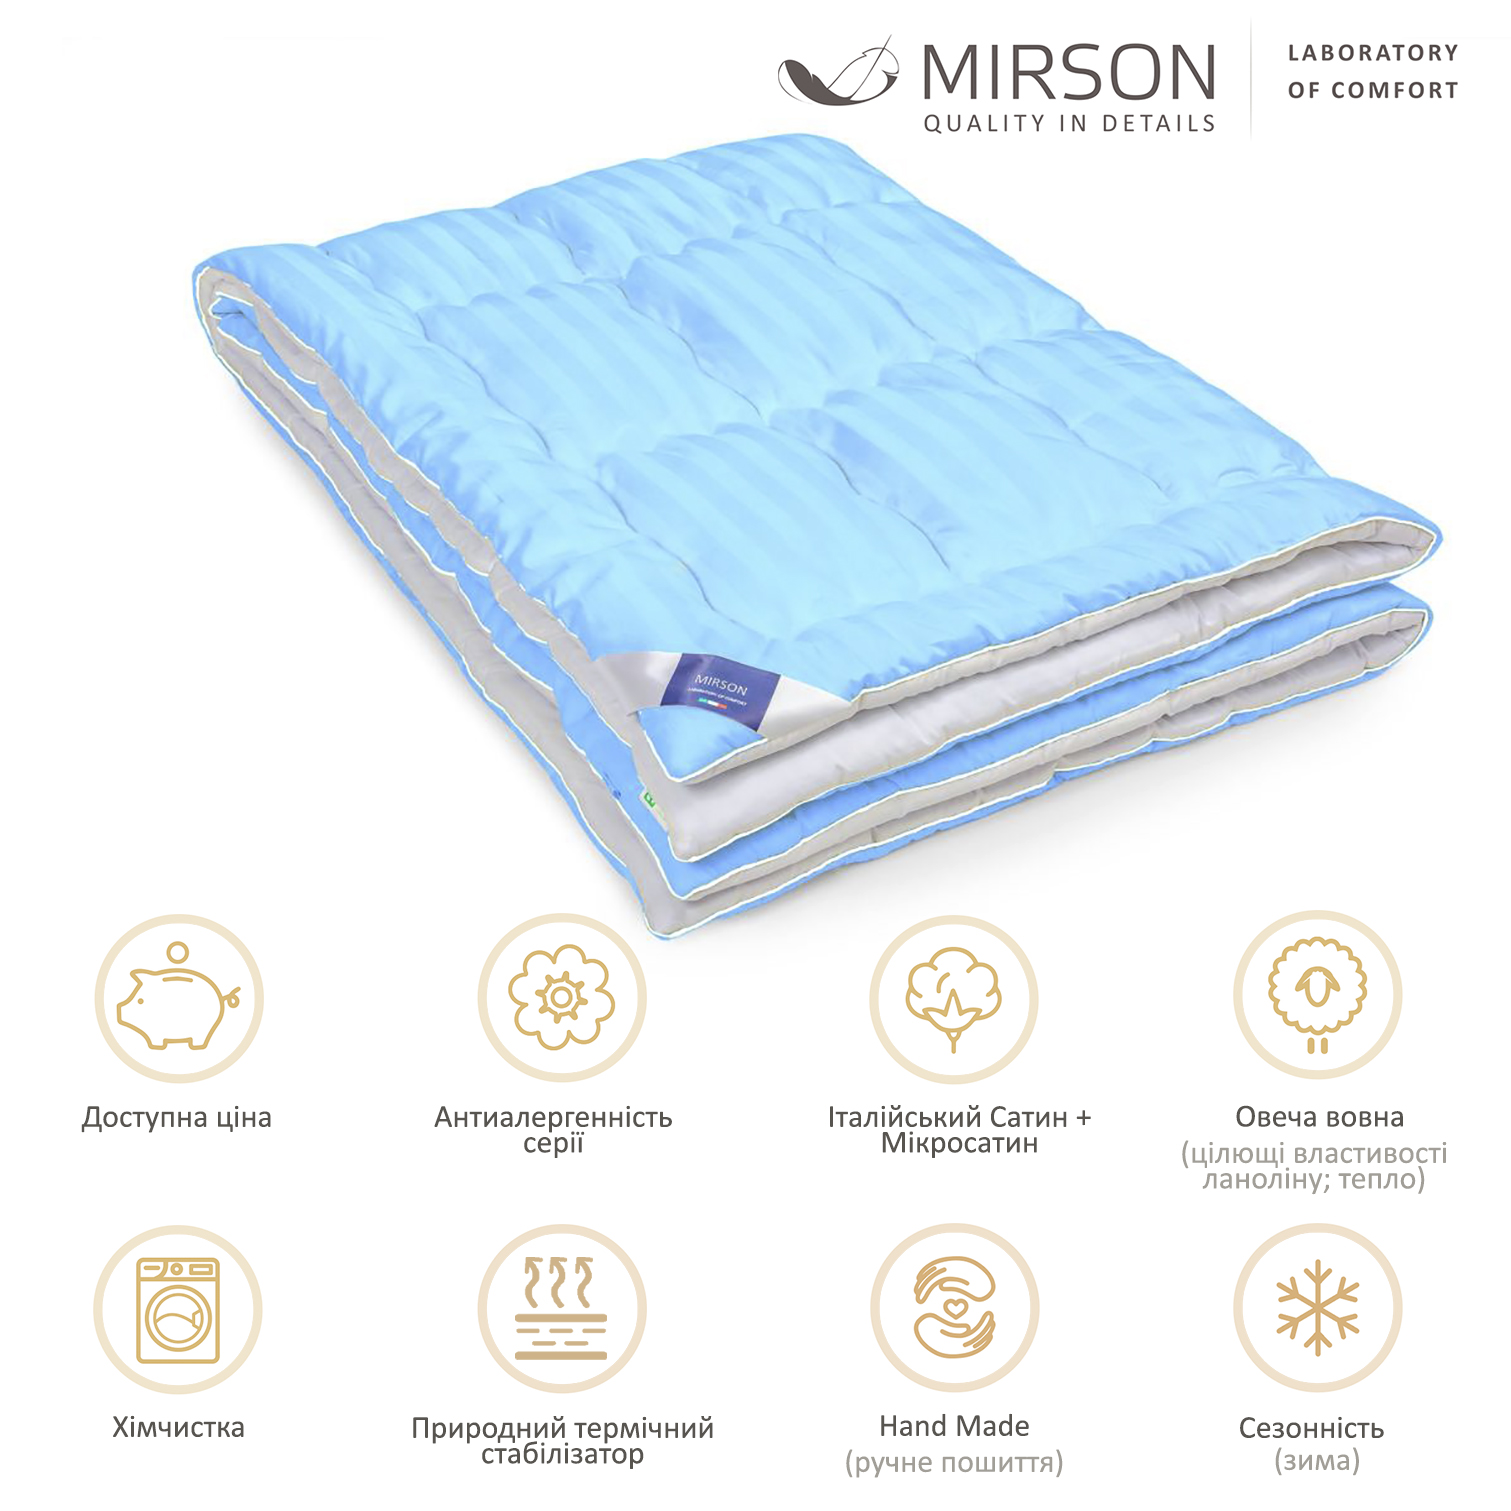 Одеяло шерстяное MirSon Valentino Hand Made №1356, зимнее, 110x140 см, бело-голубое - фото 5